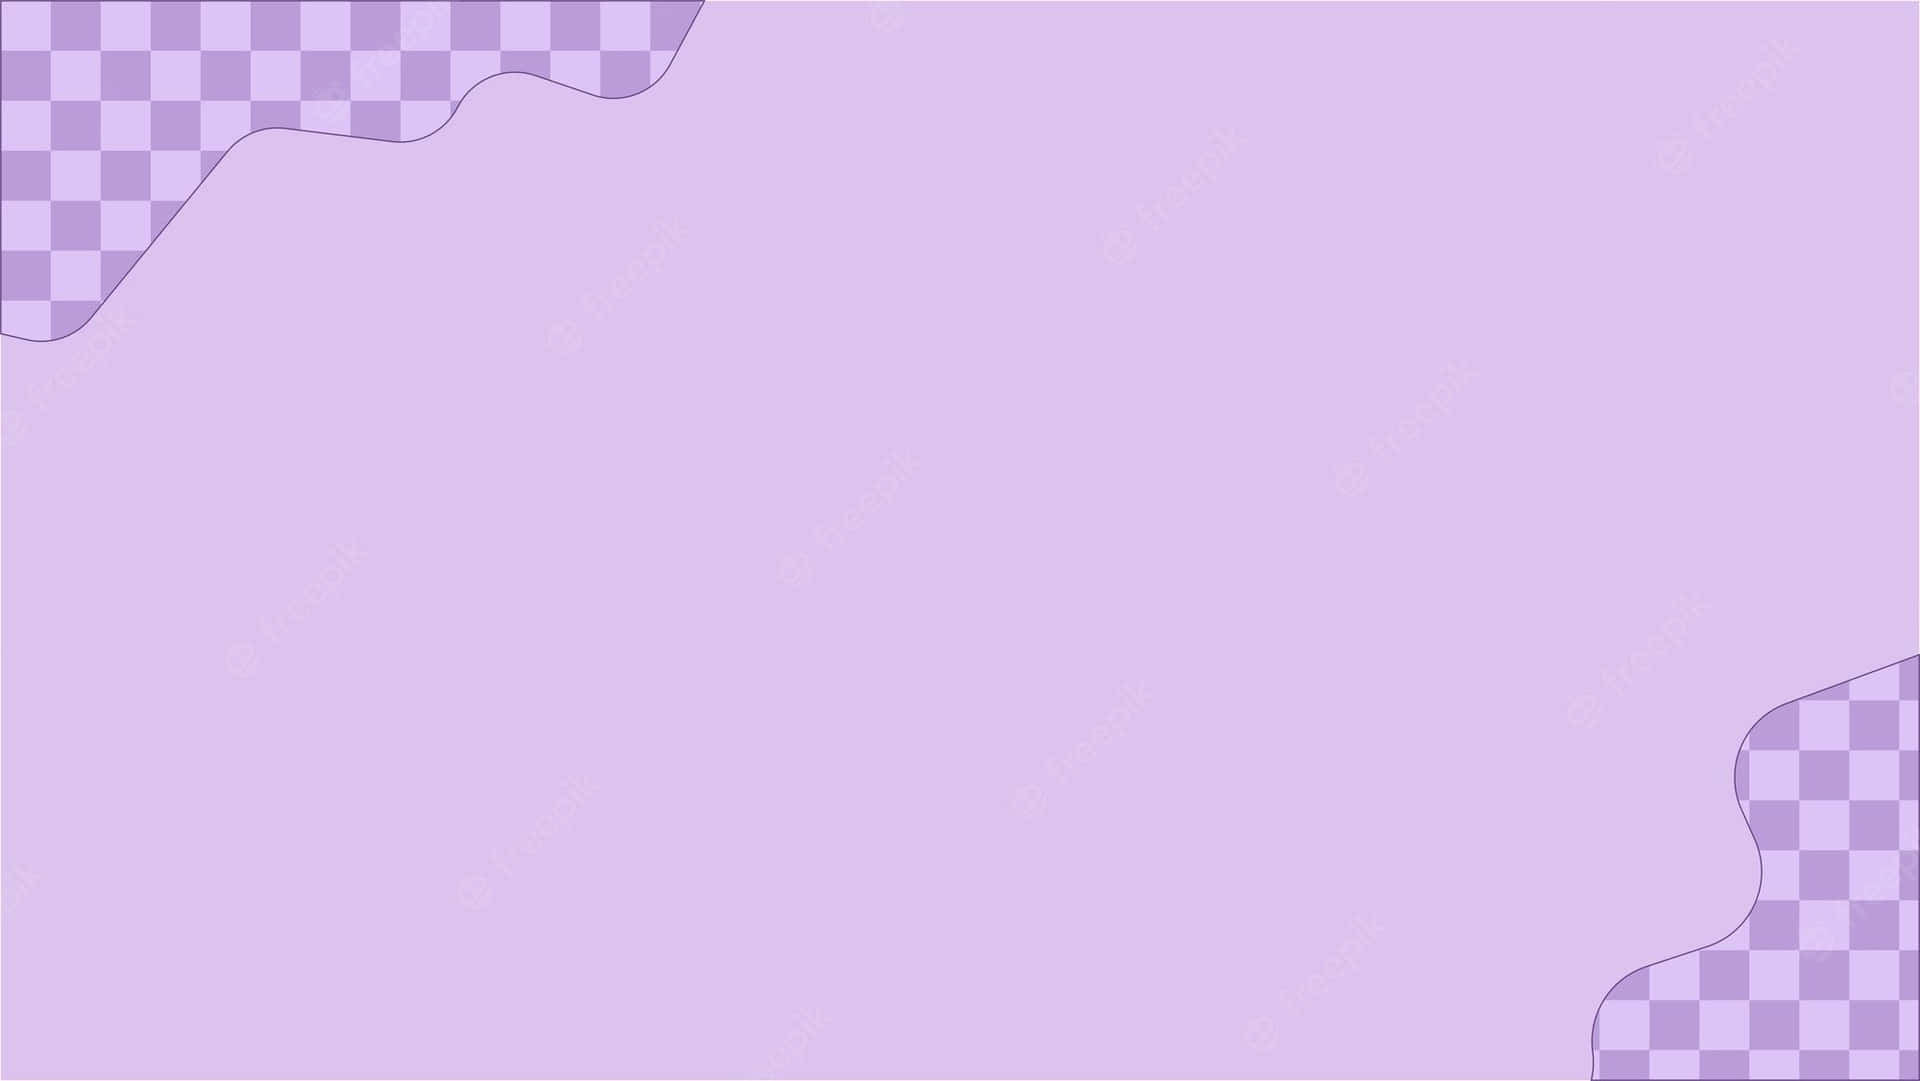 Download wallpaper 1366x768 inscription neon cube glow purple tablet  laptop hd background